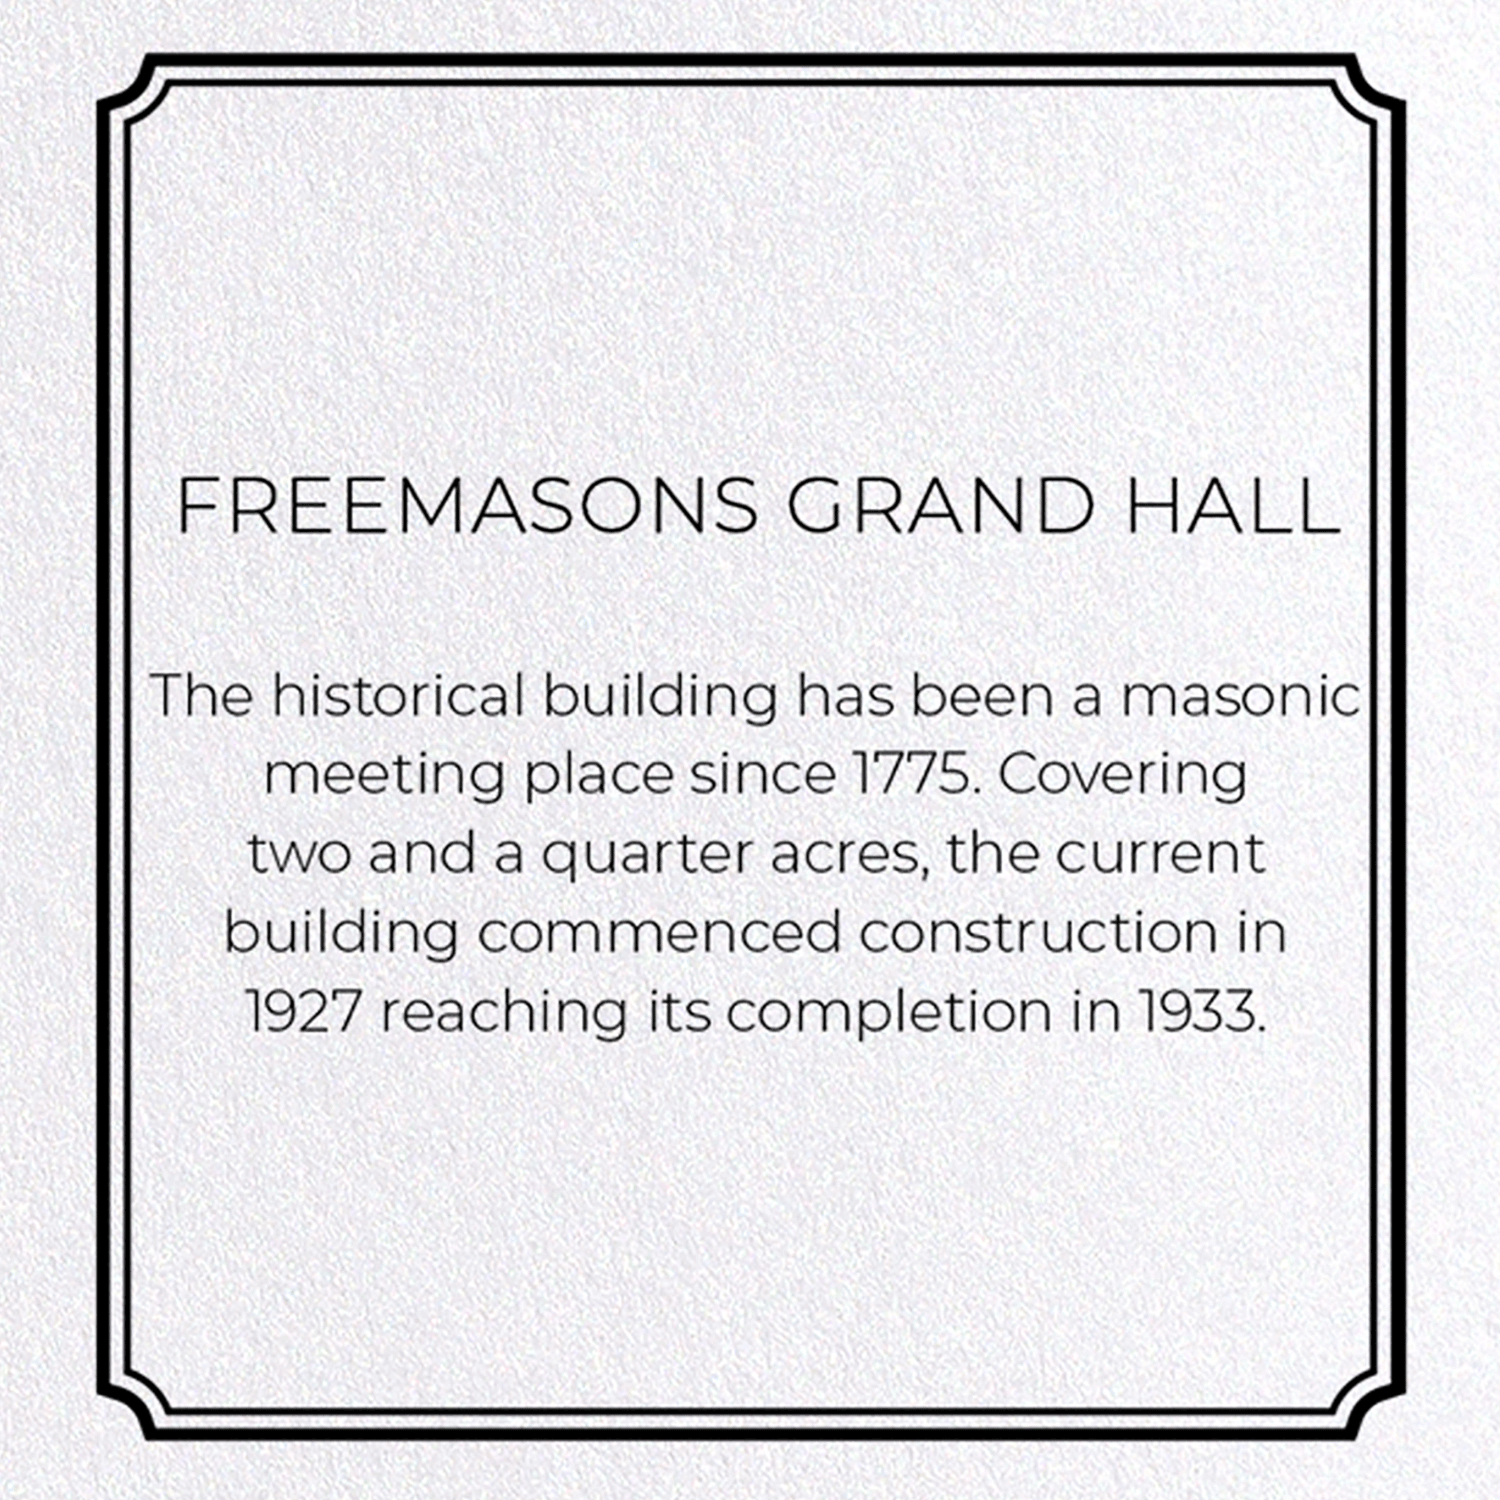 FREEMASONS GRAND HALL: Charcoal Greeting Card